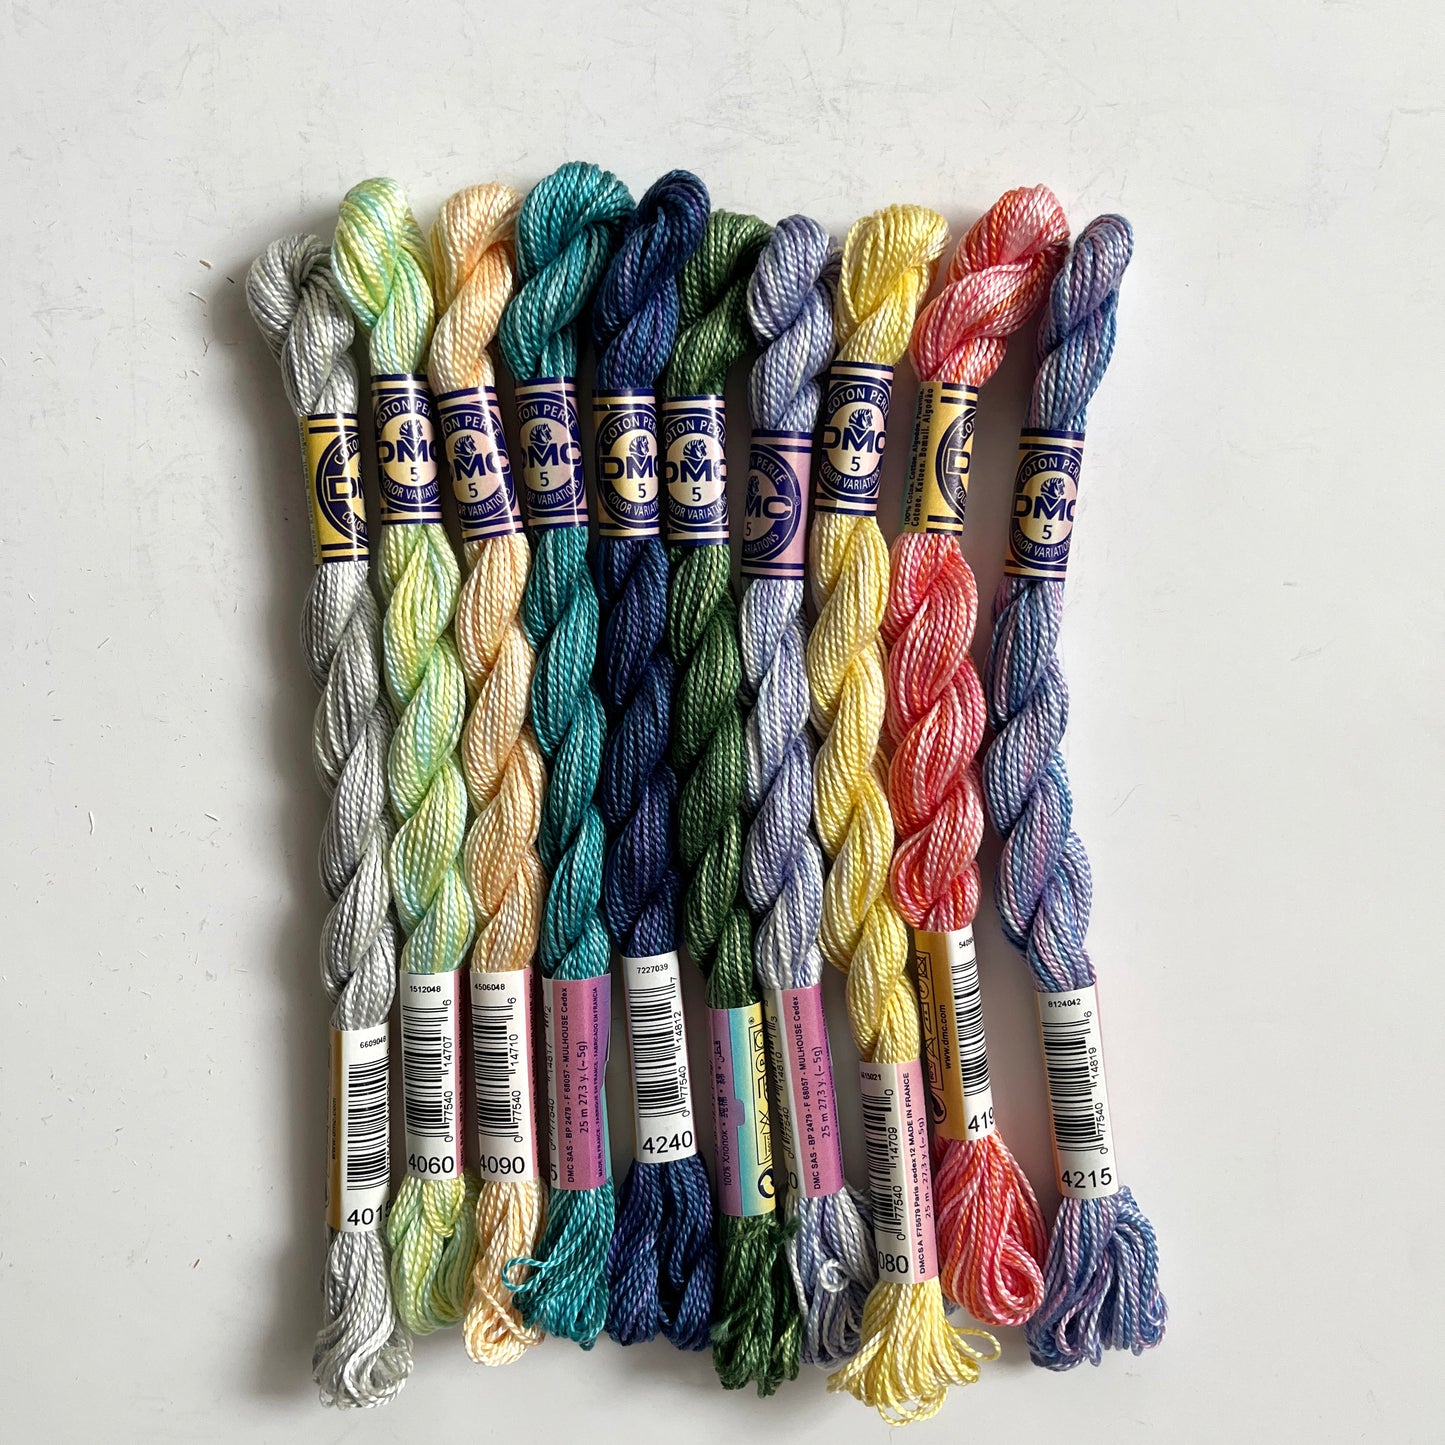 A bundle of perle cotton thread